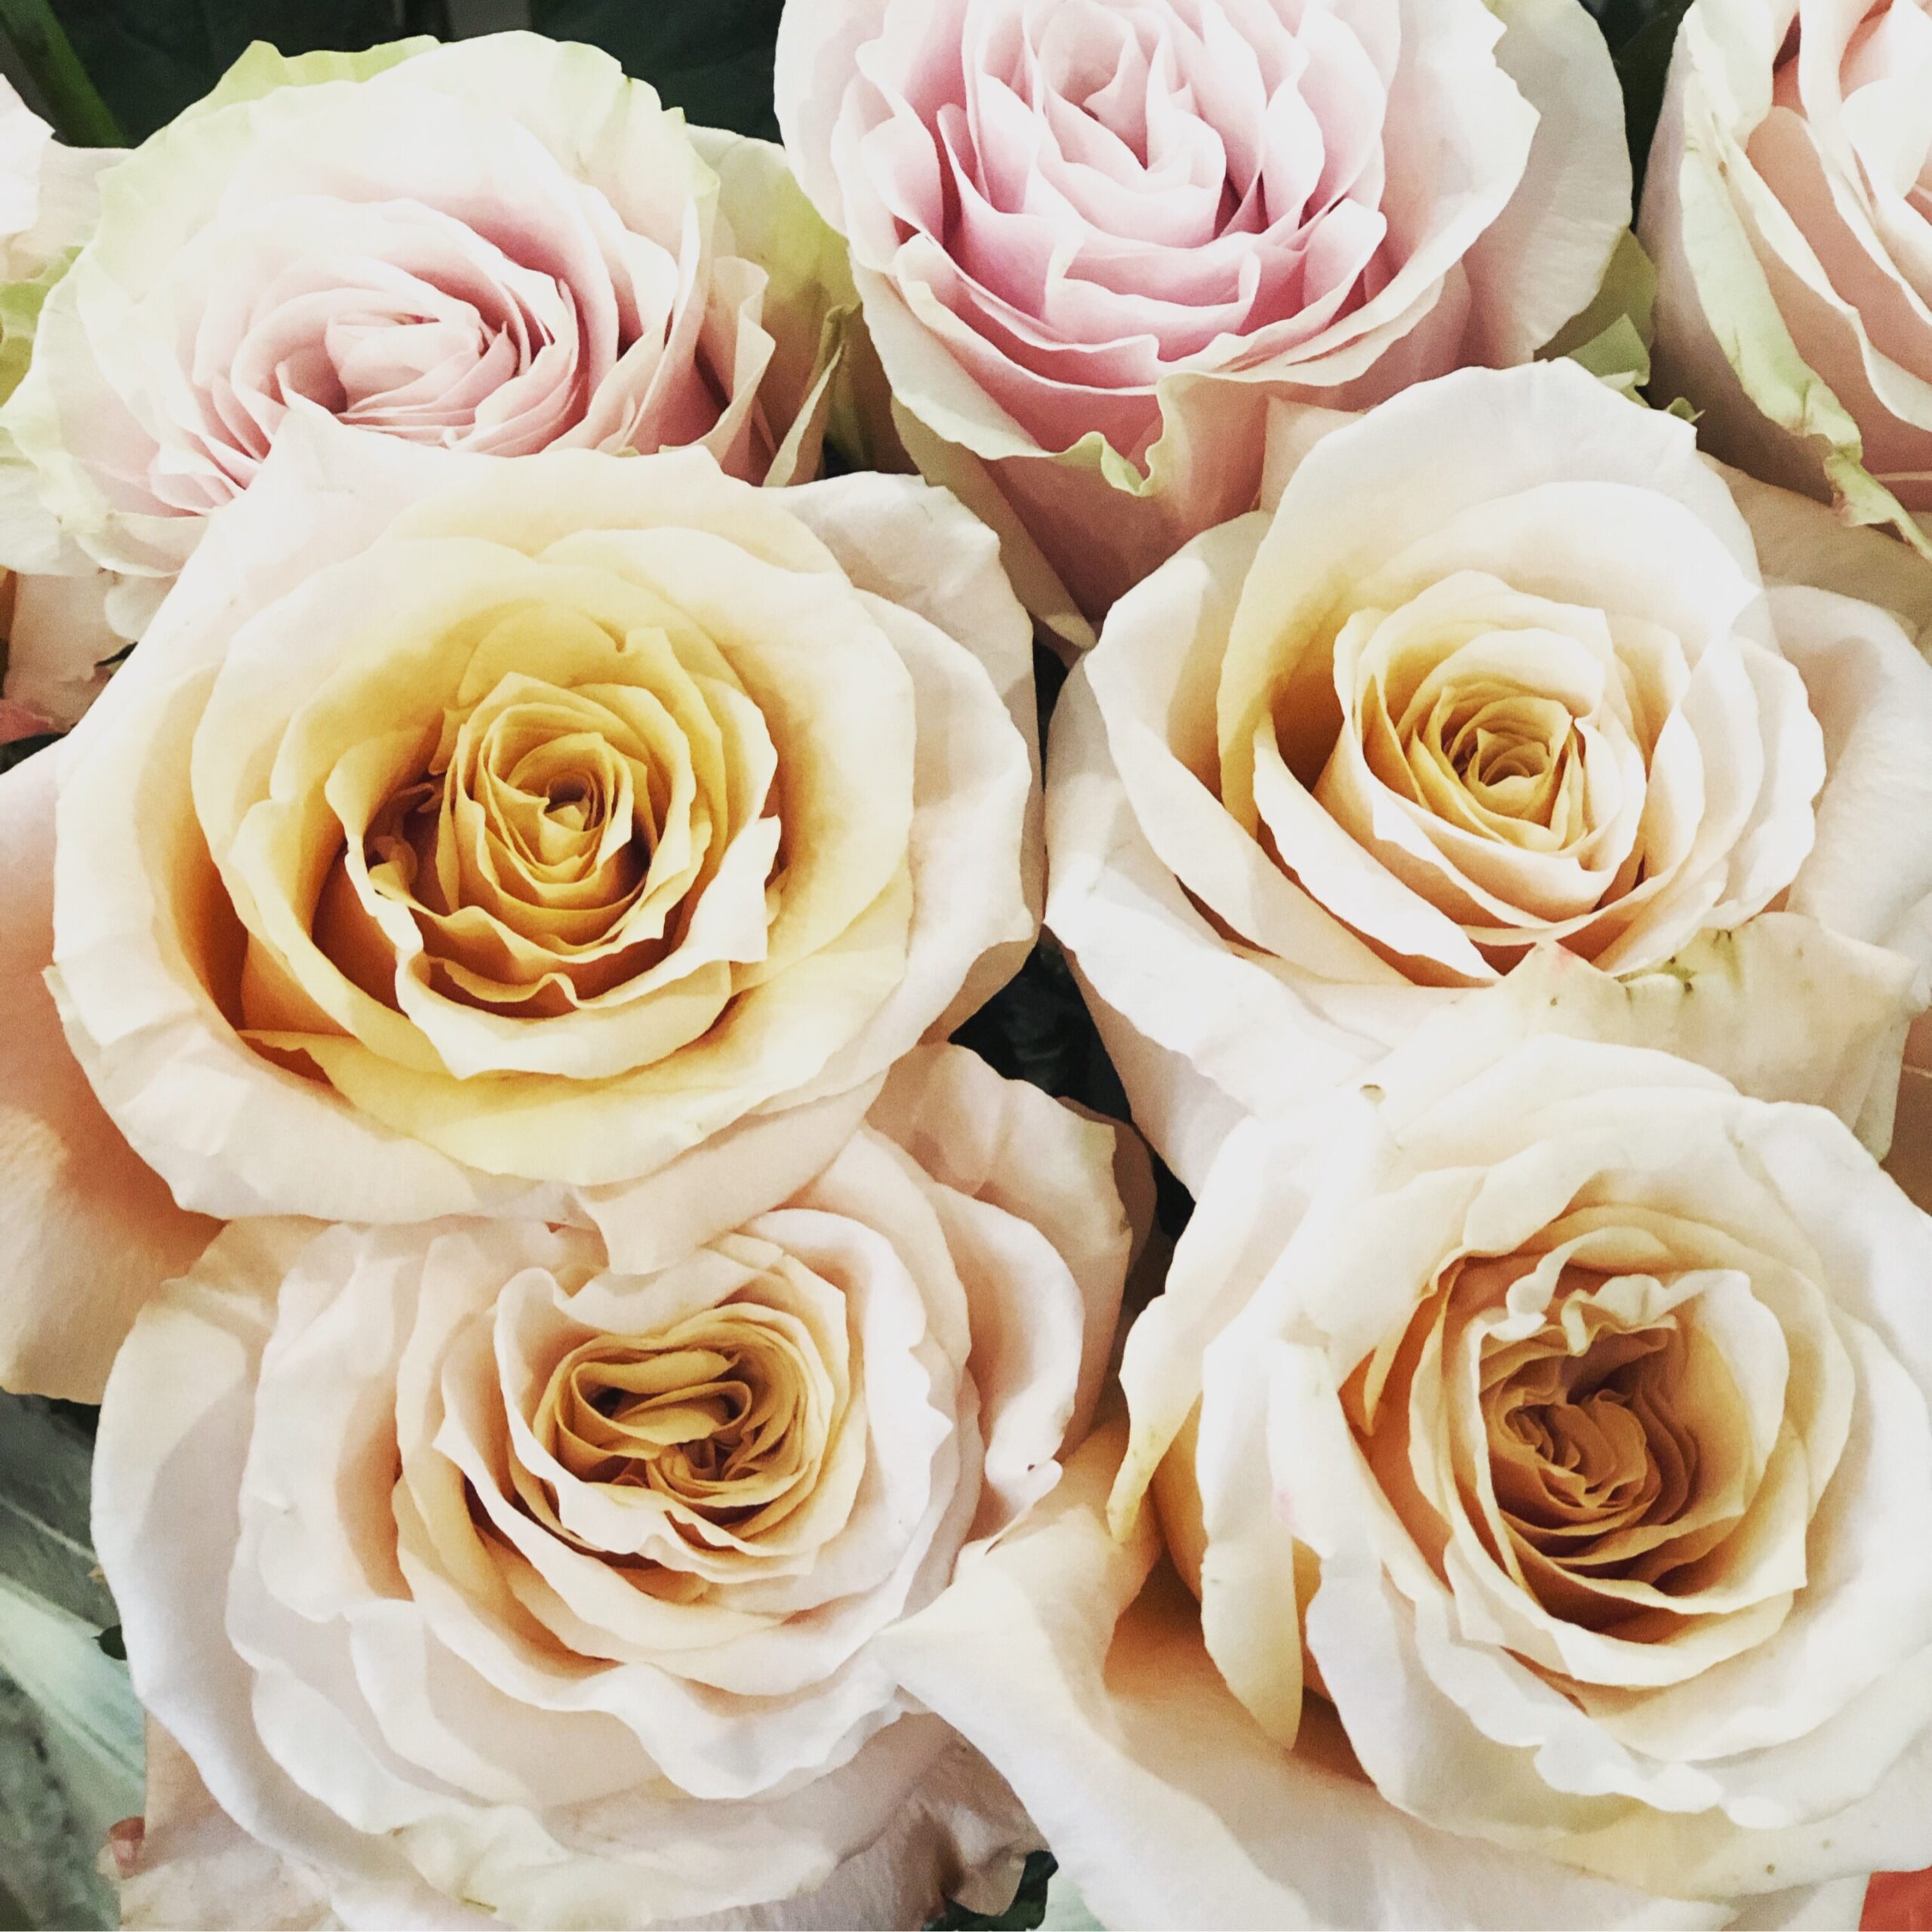 Weekly Surprise Roses